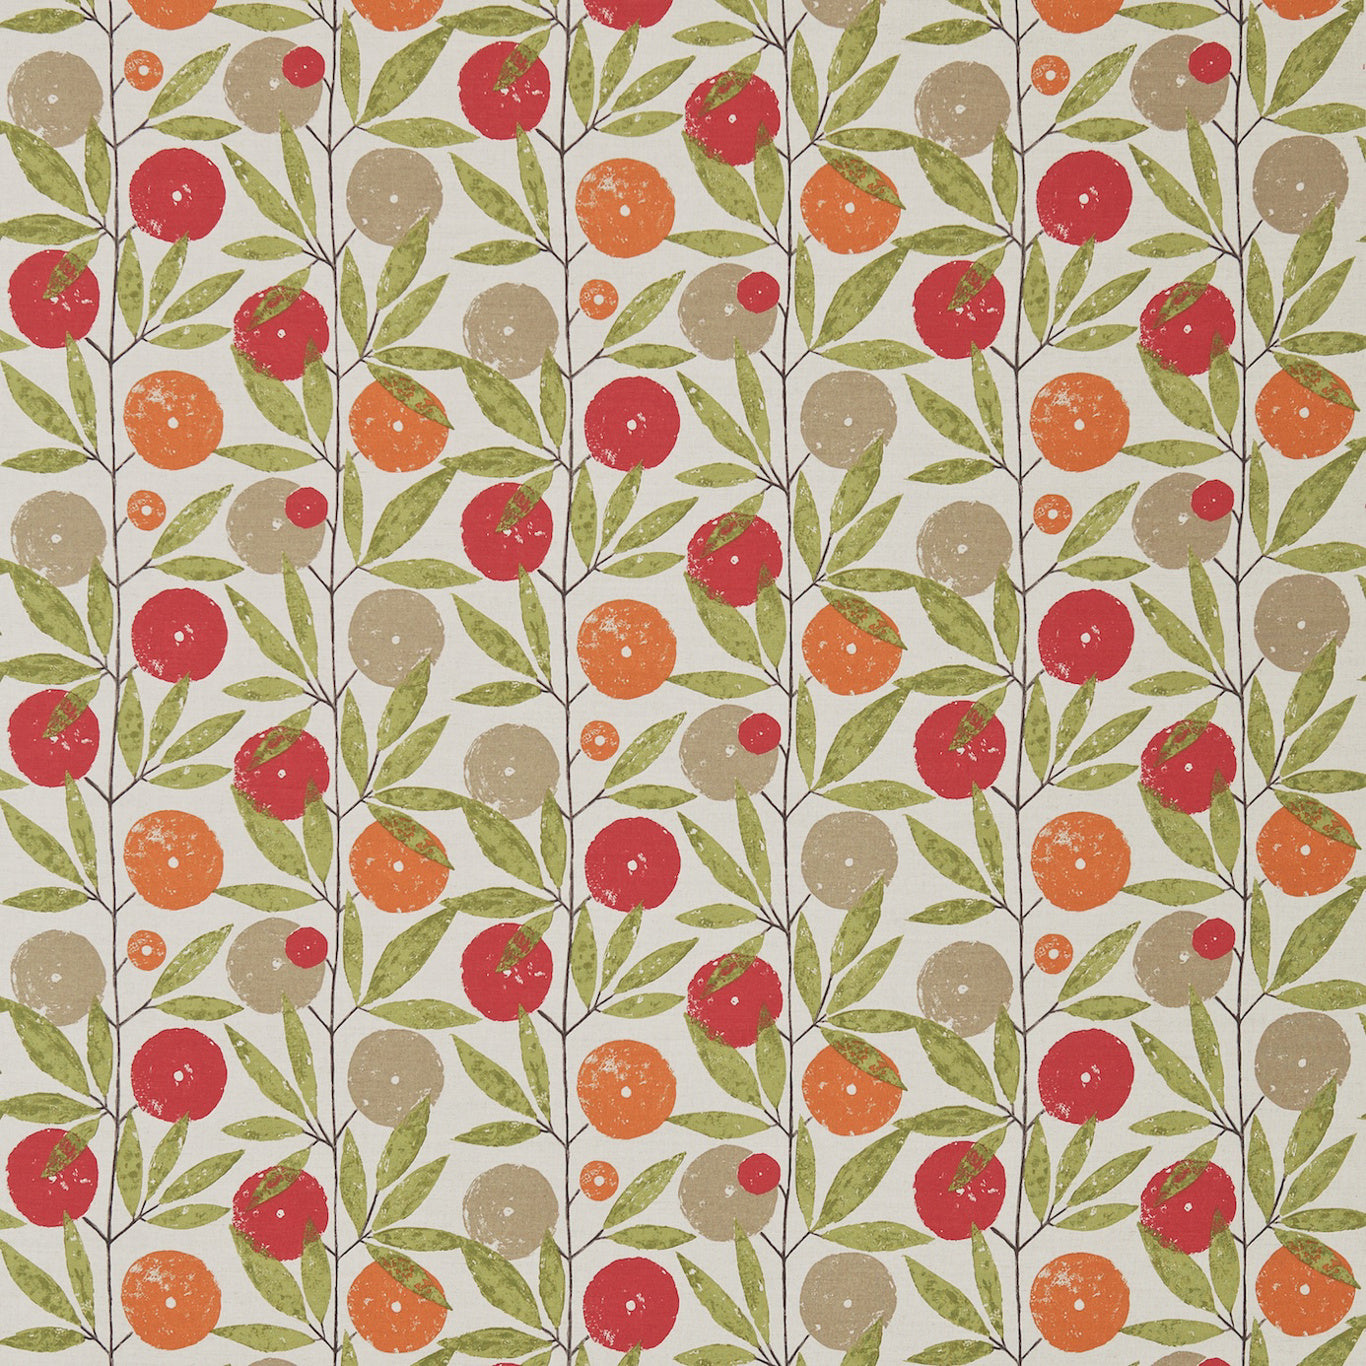 Blomma Fabric by Scion - NFIK120358 - Tangerine / Chilli / Citrus